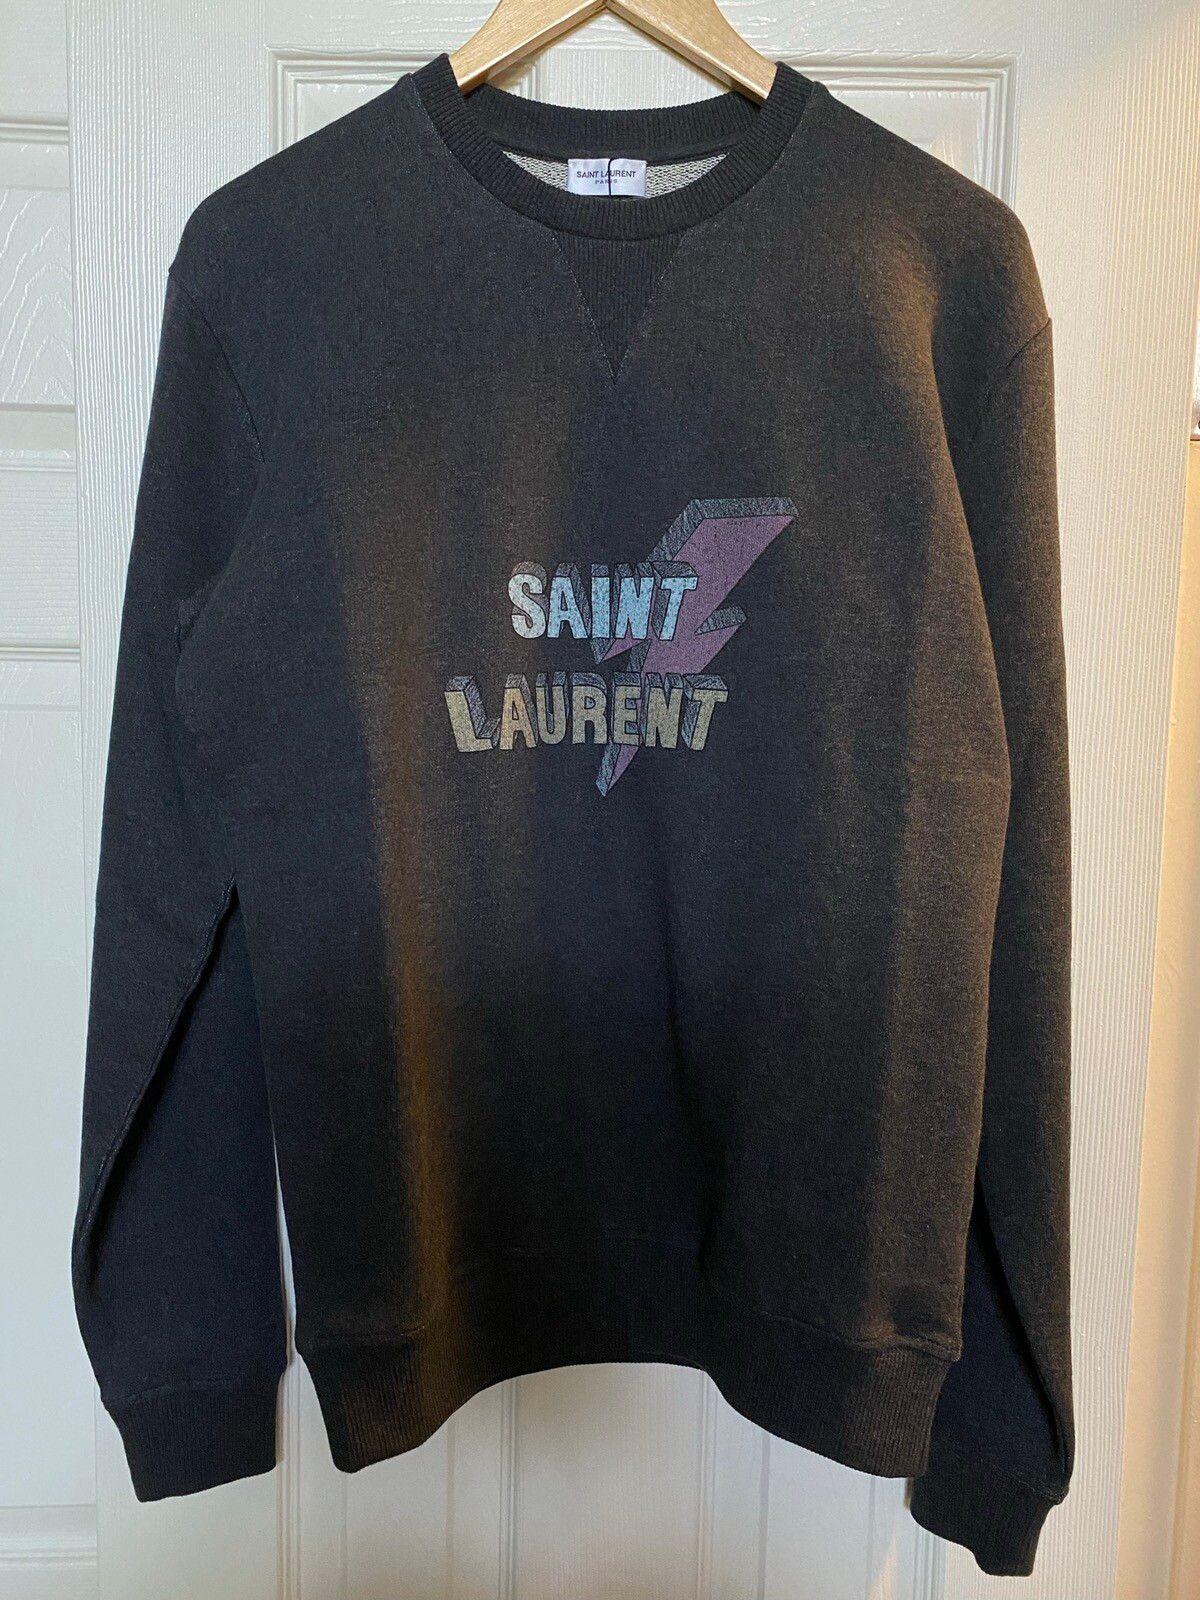 Saint Laurent Paris Eclair lightening bolt logo sweatshirt | Grailed